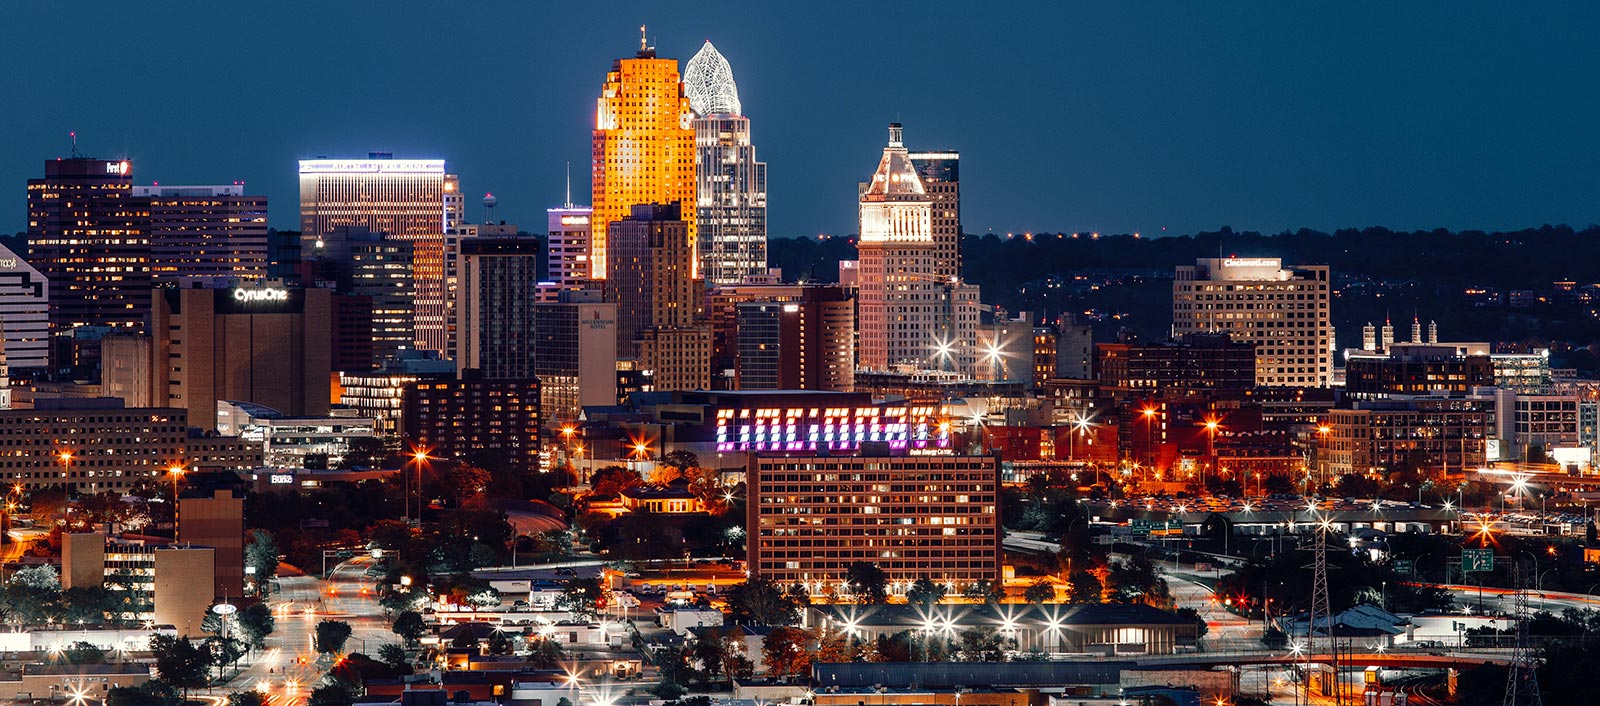 Random Cincinnati Image from unsplash.com